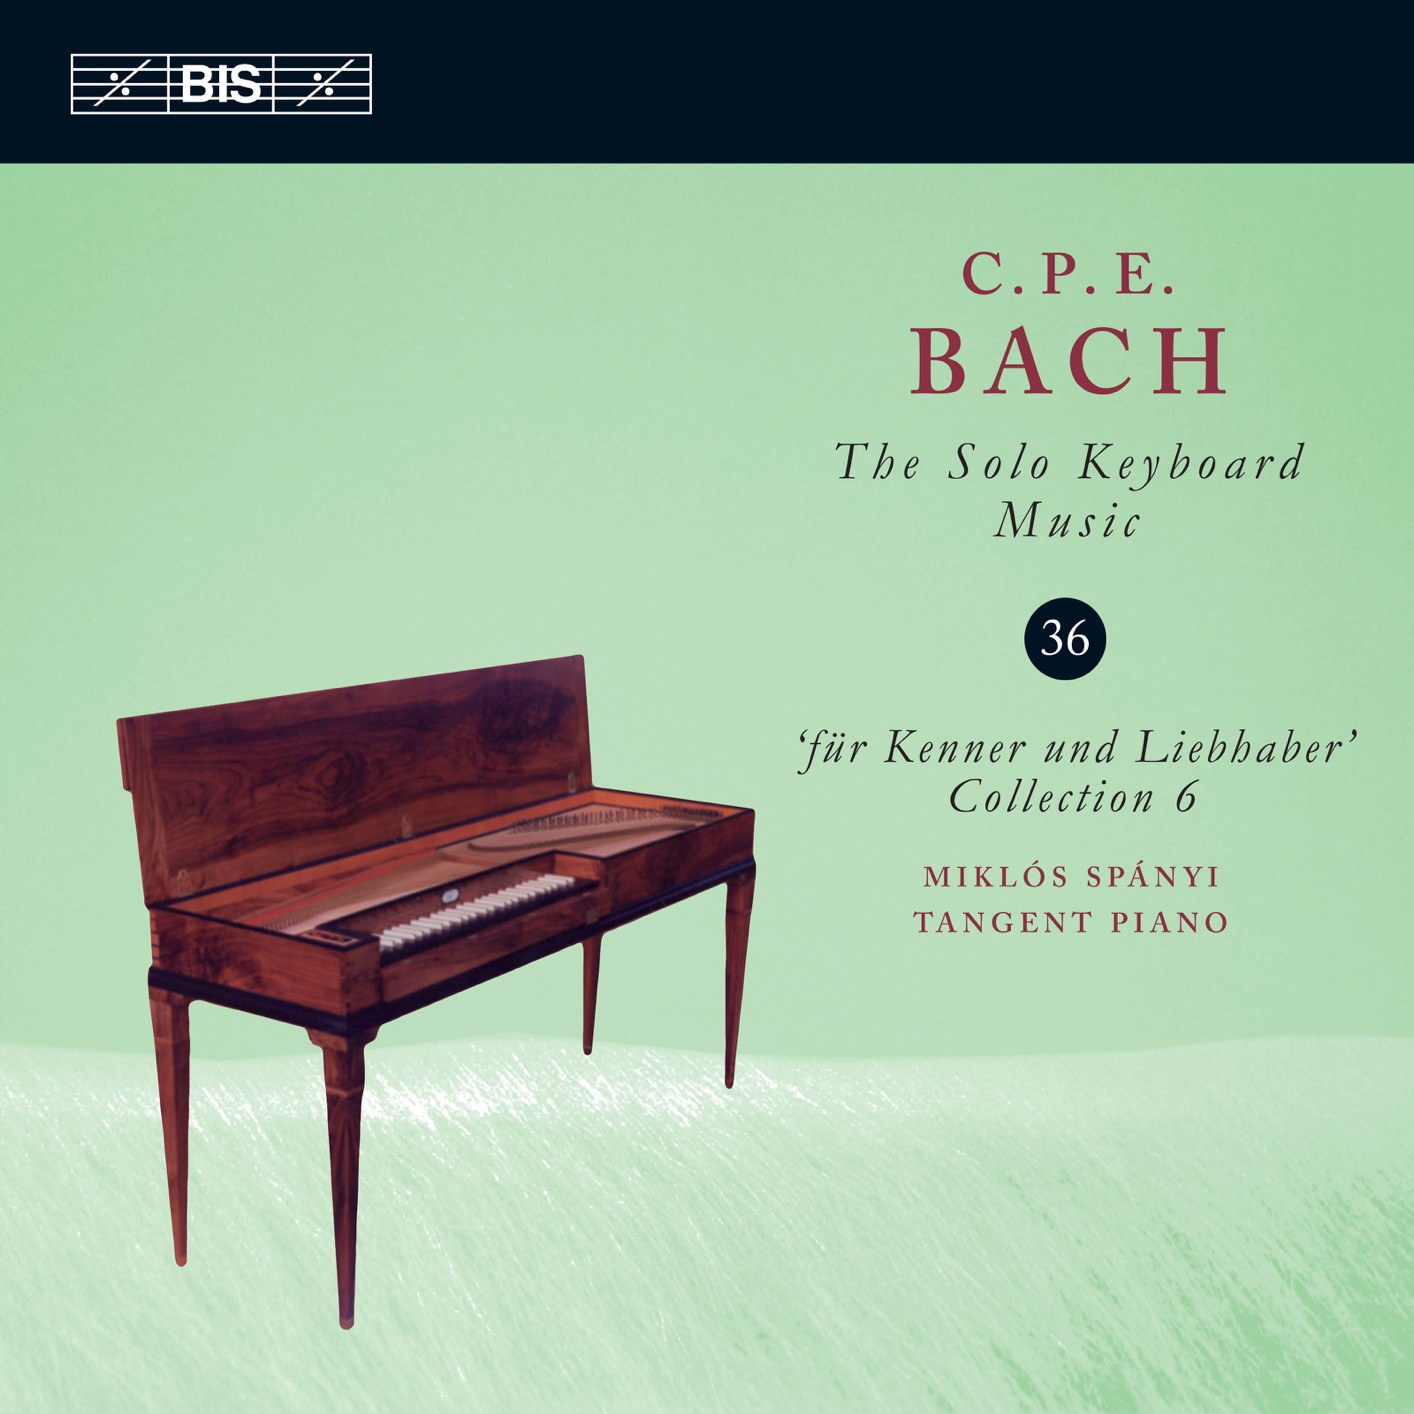 Miklos Spanyi – C.P.E. Bach: The Solo Keyboard Music, Vol. 36 (2018) [FLAC 24bit/96kHz]